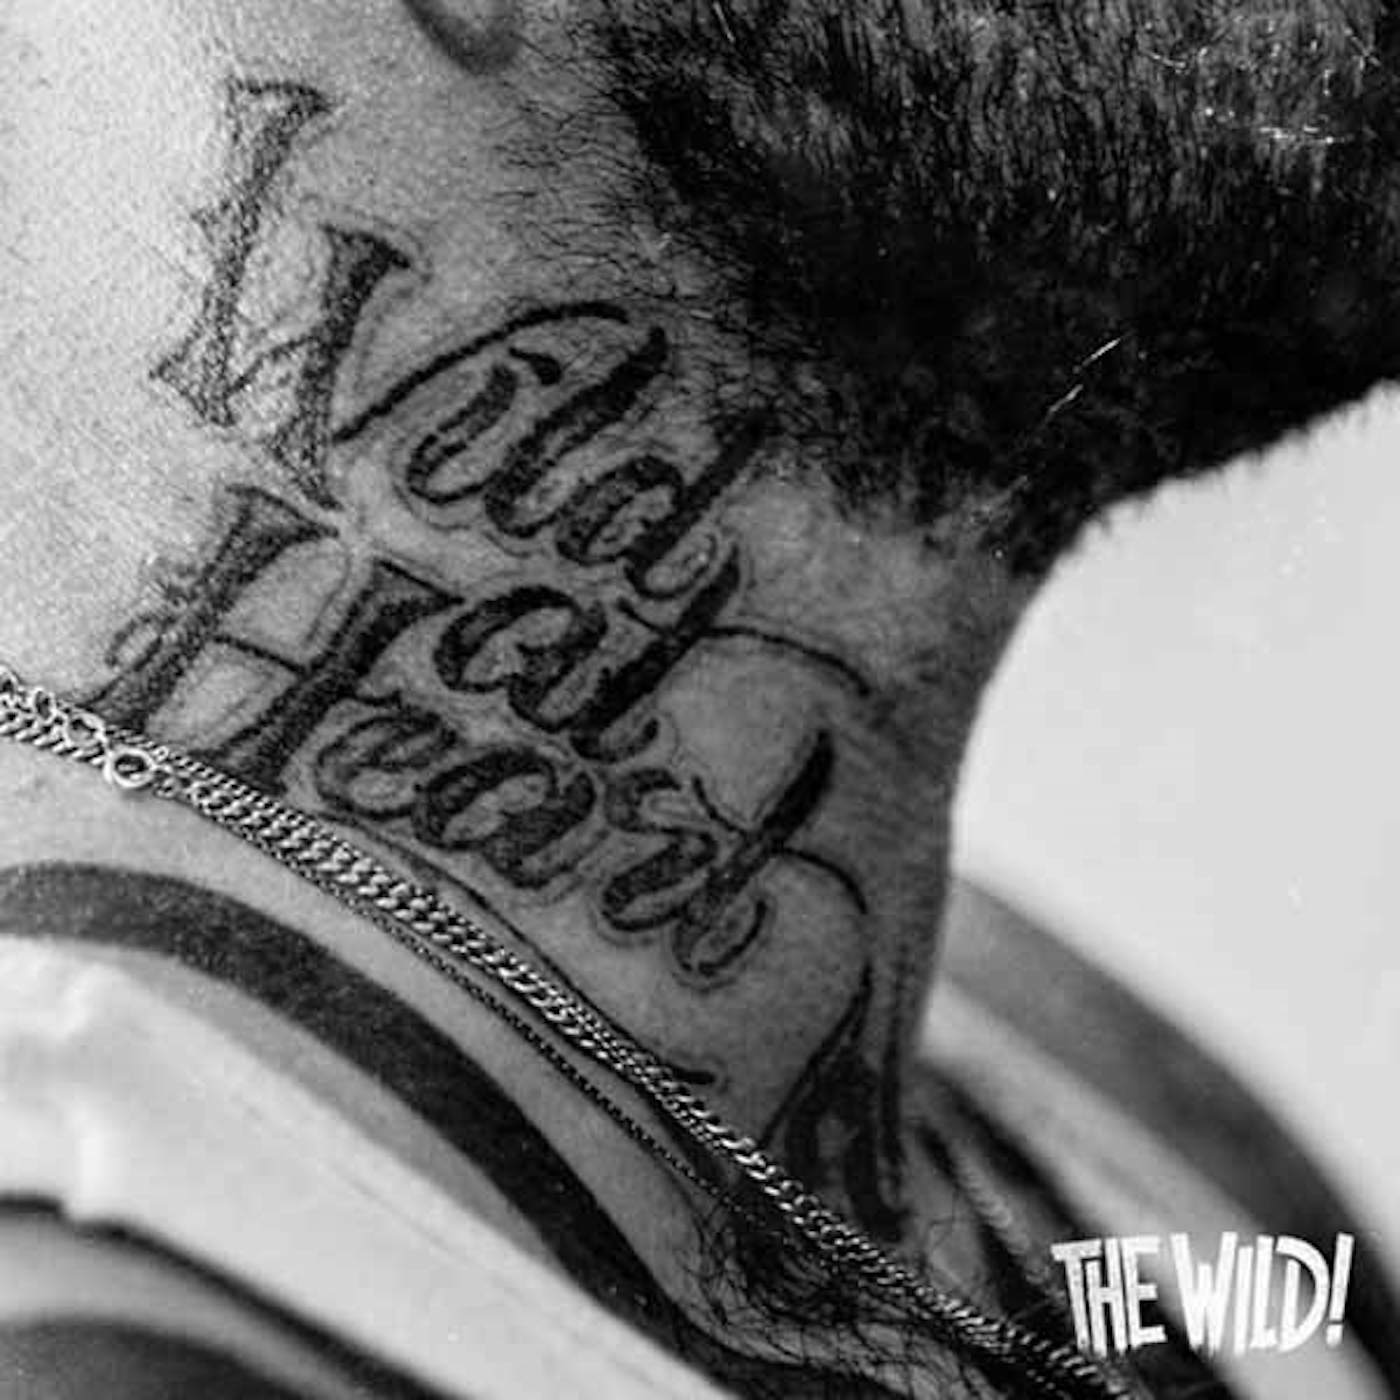 The Wild LP - Wild At Heart (Vinyl)